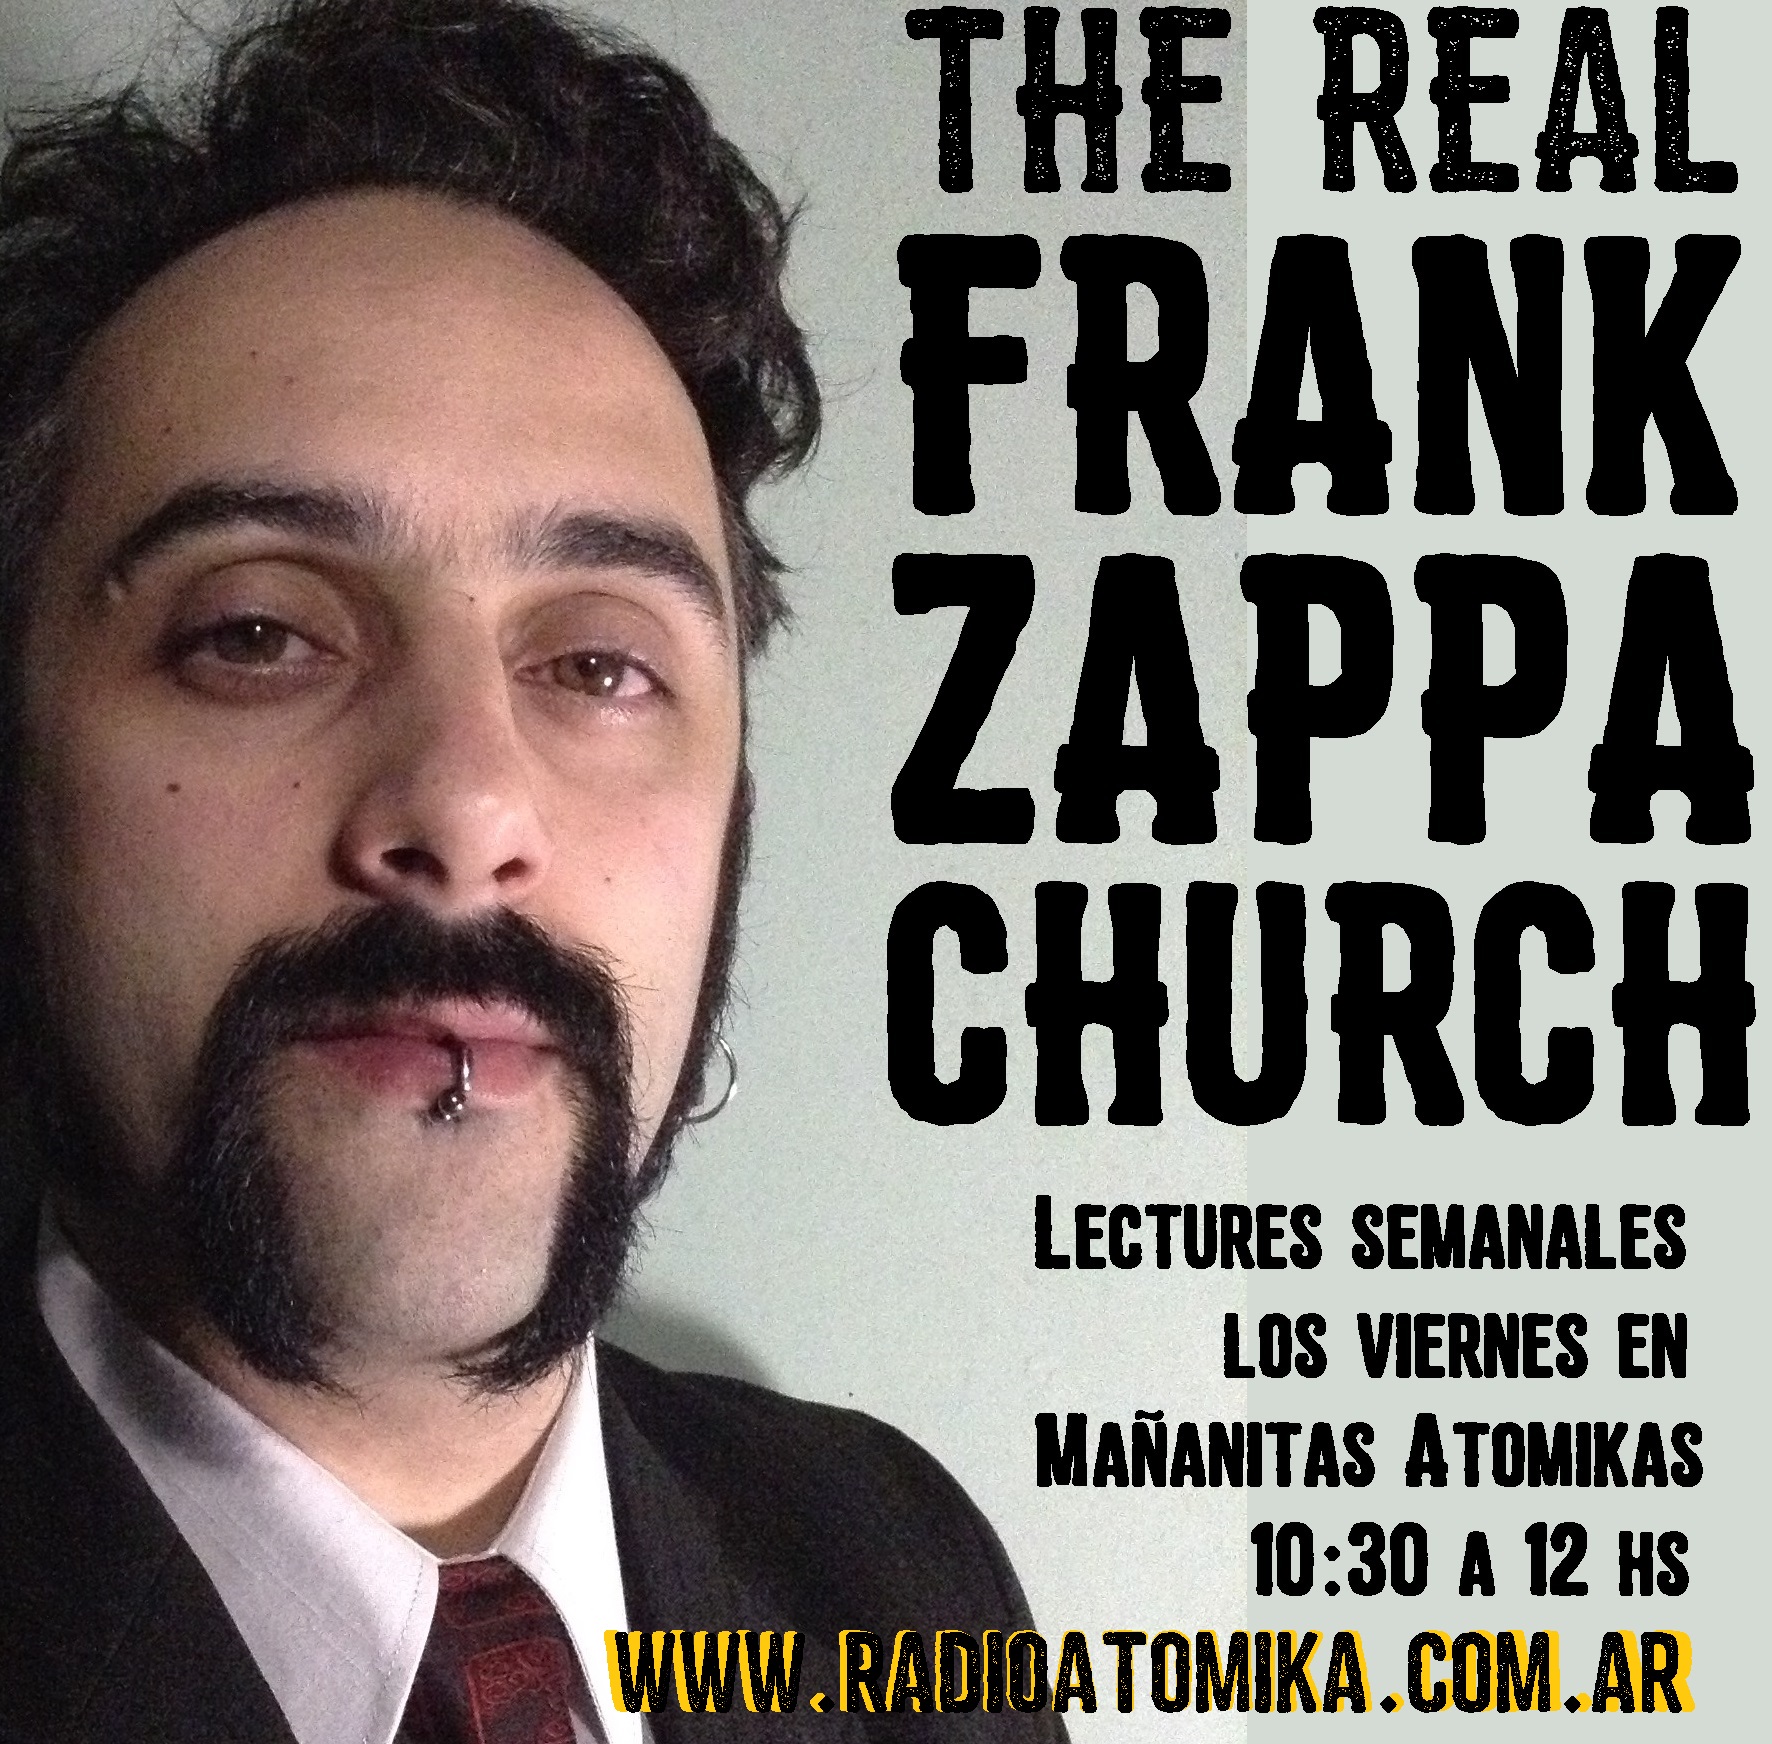 The Real Frank Zappa Church